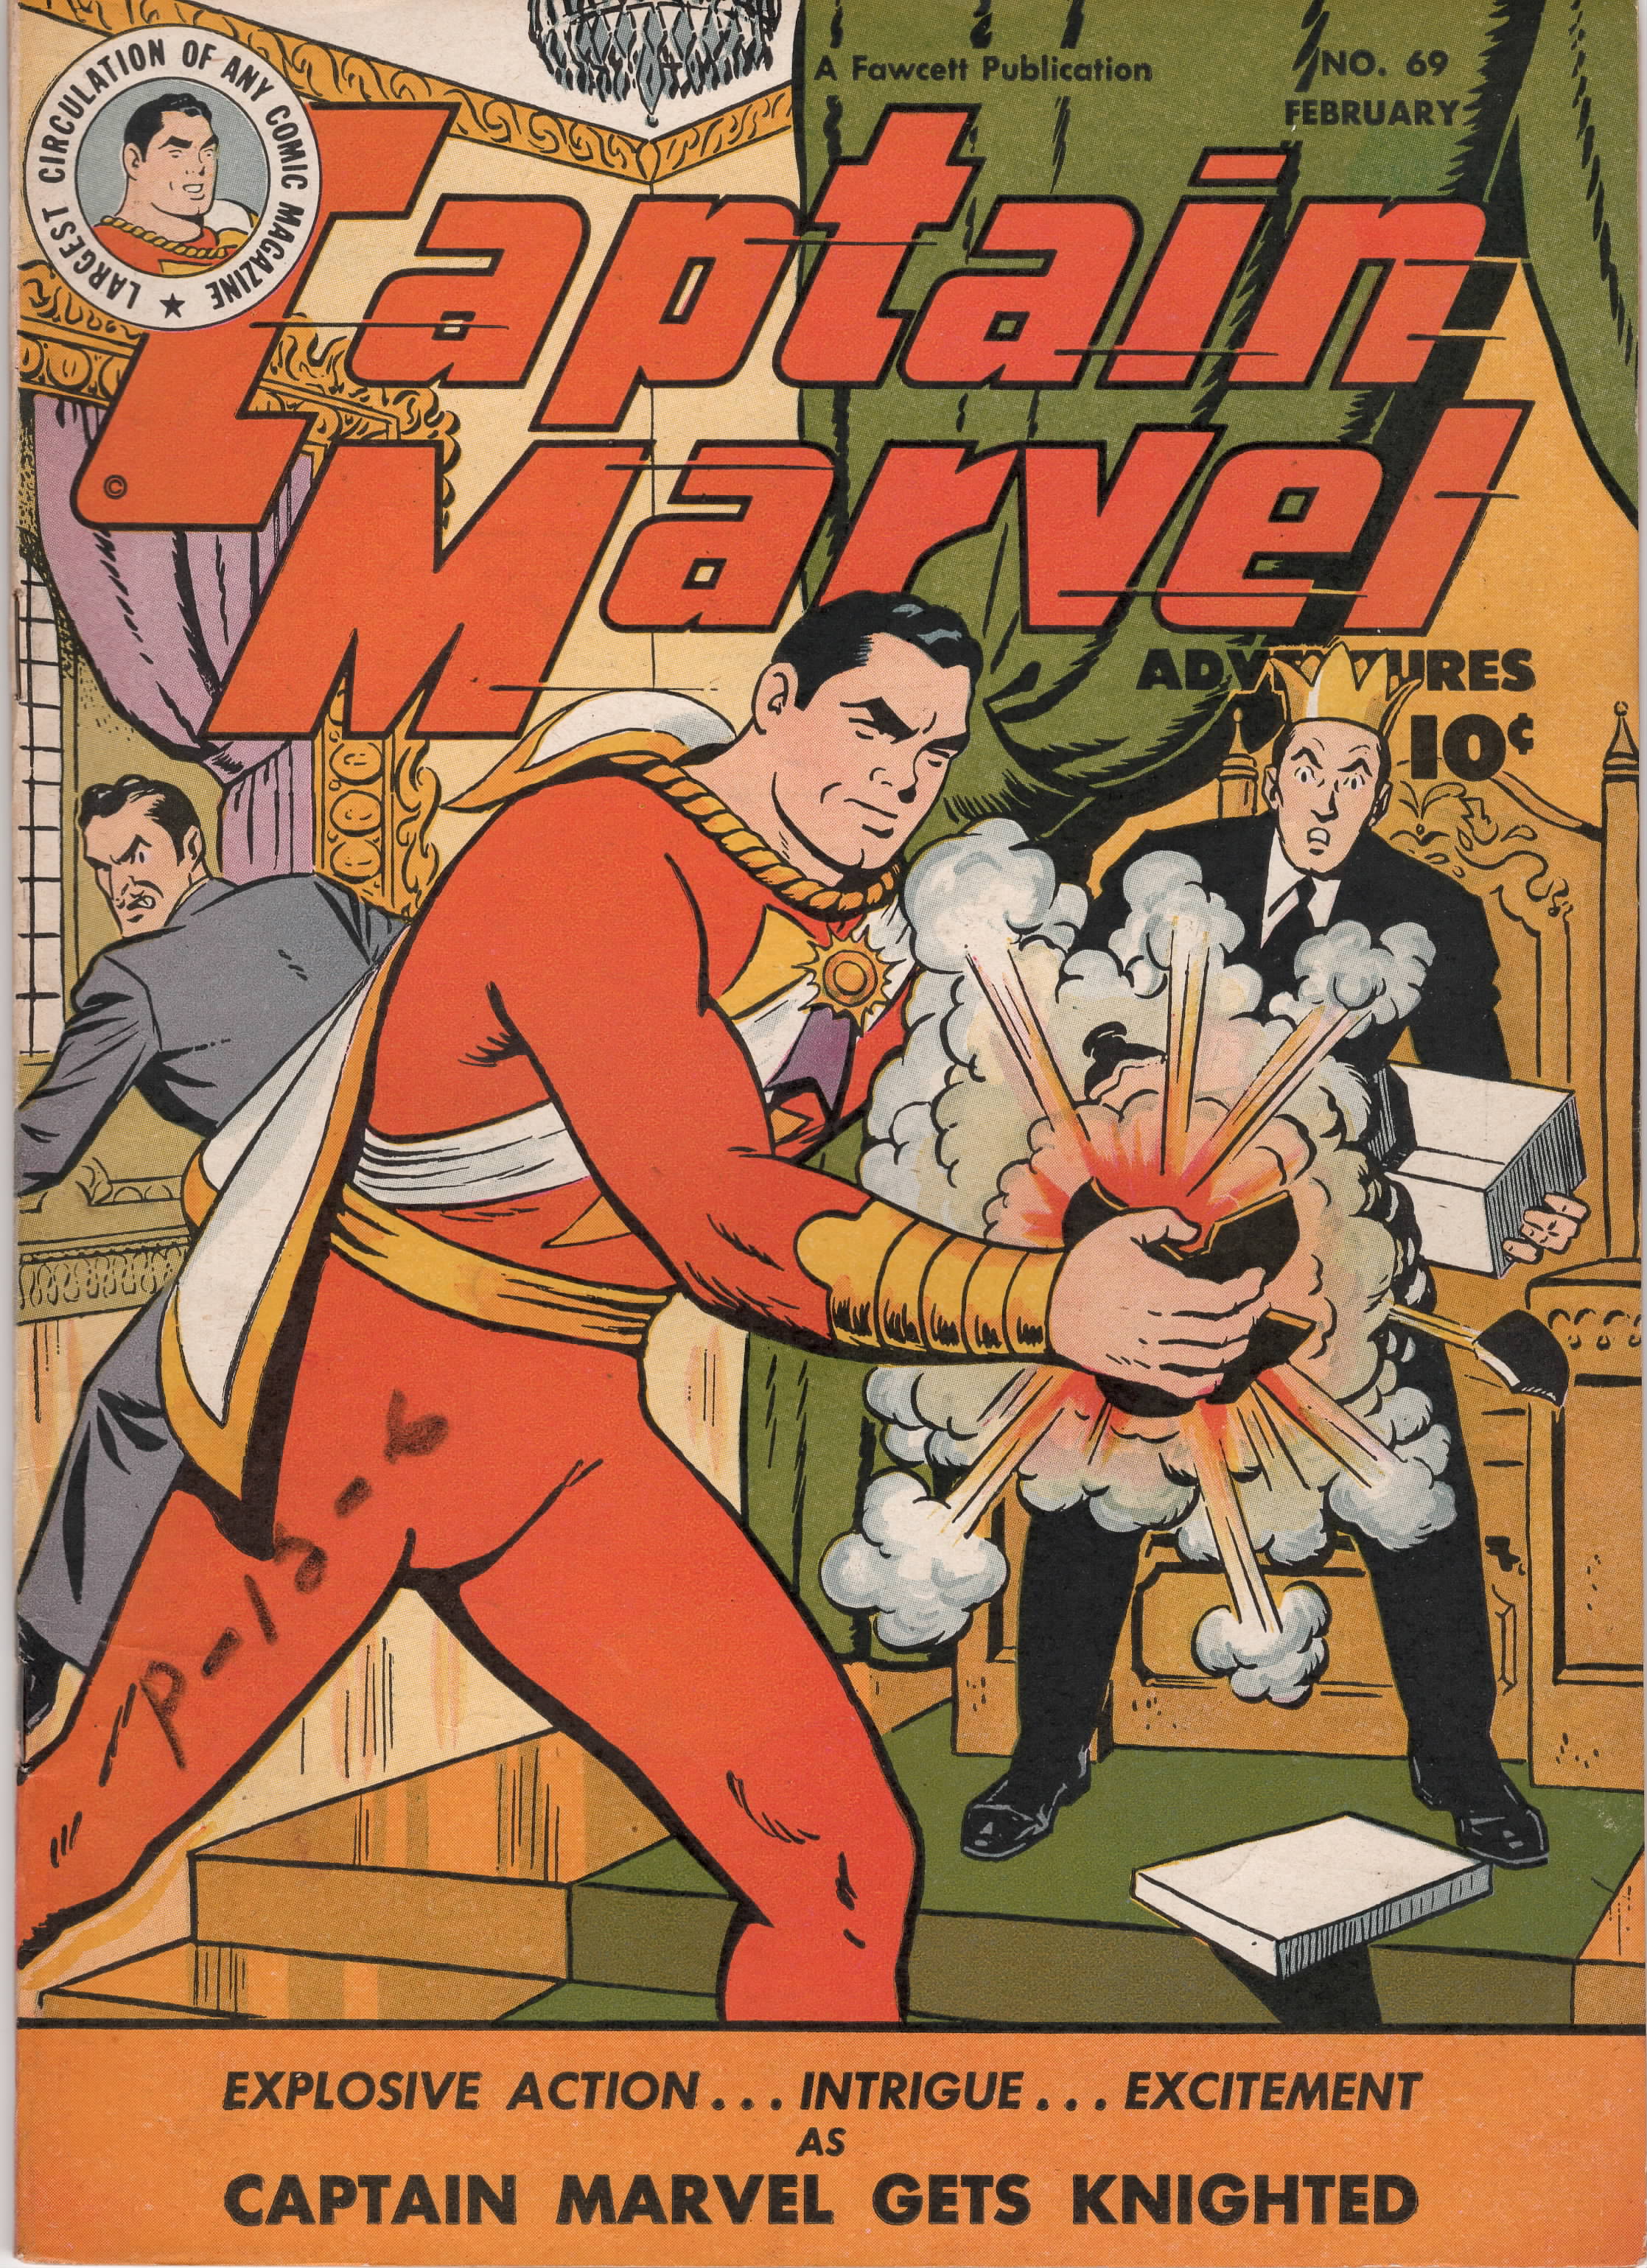 Captain Marvel Adventures #069